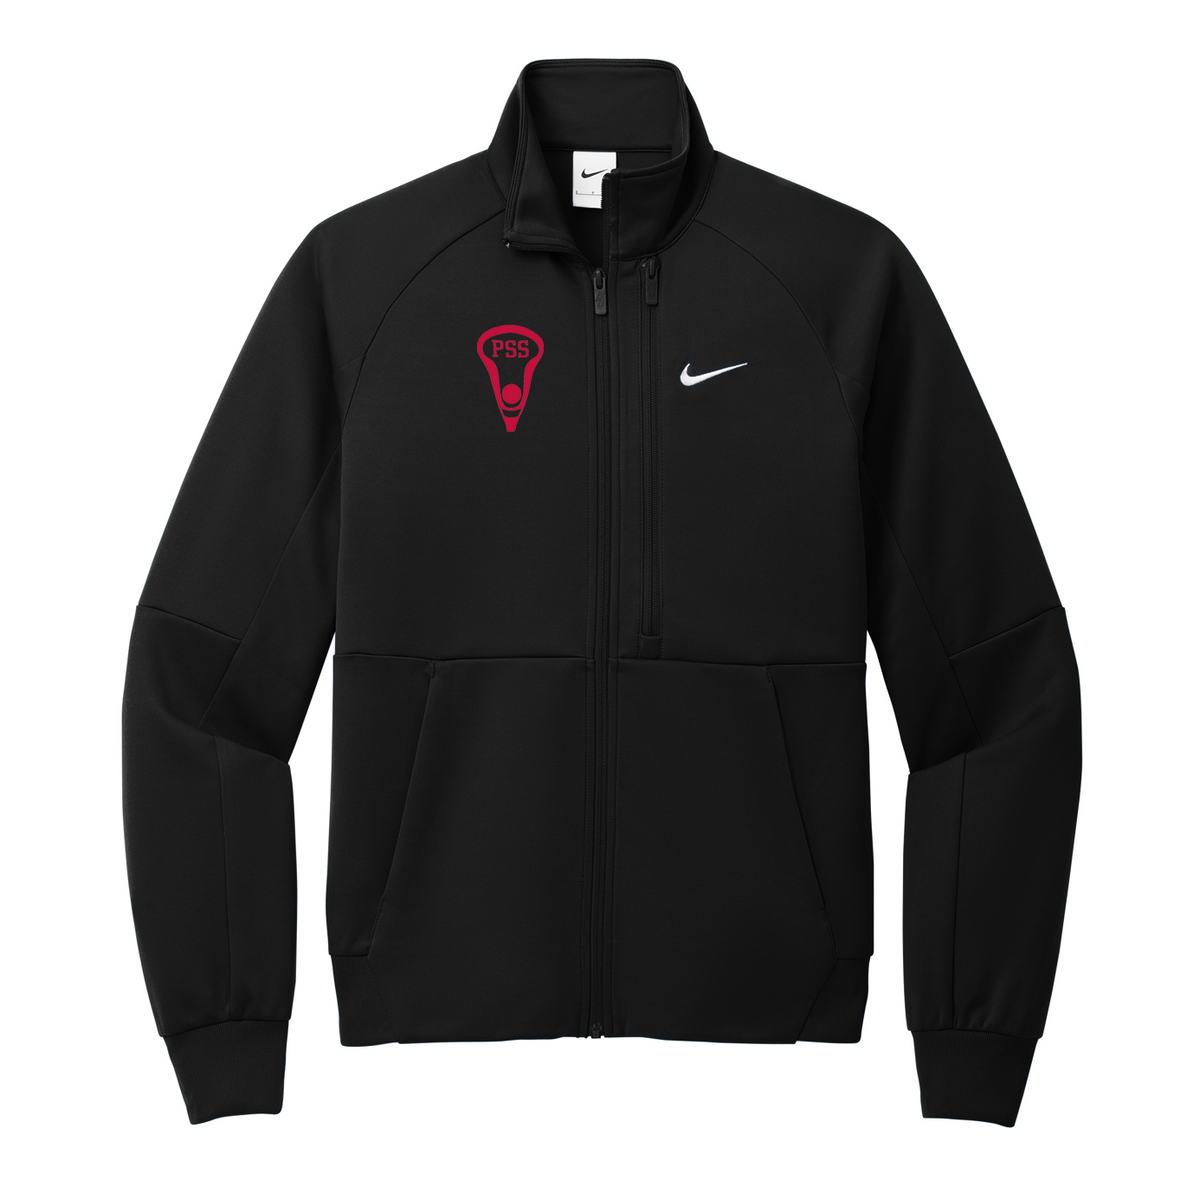 PSS Lacrosse Nike Full-Zip Chest Swoosh Jacket